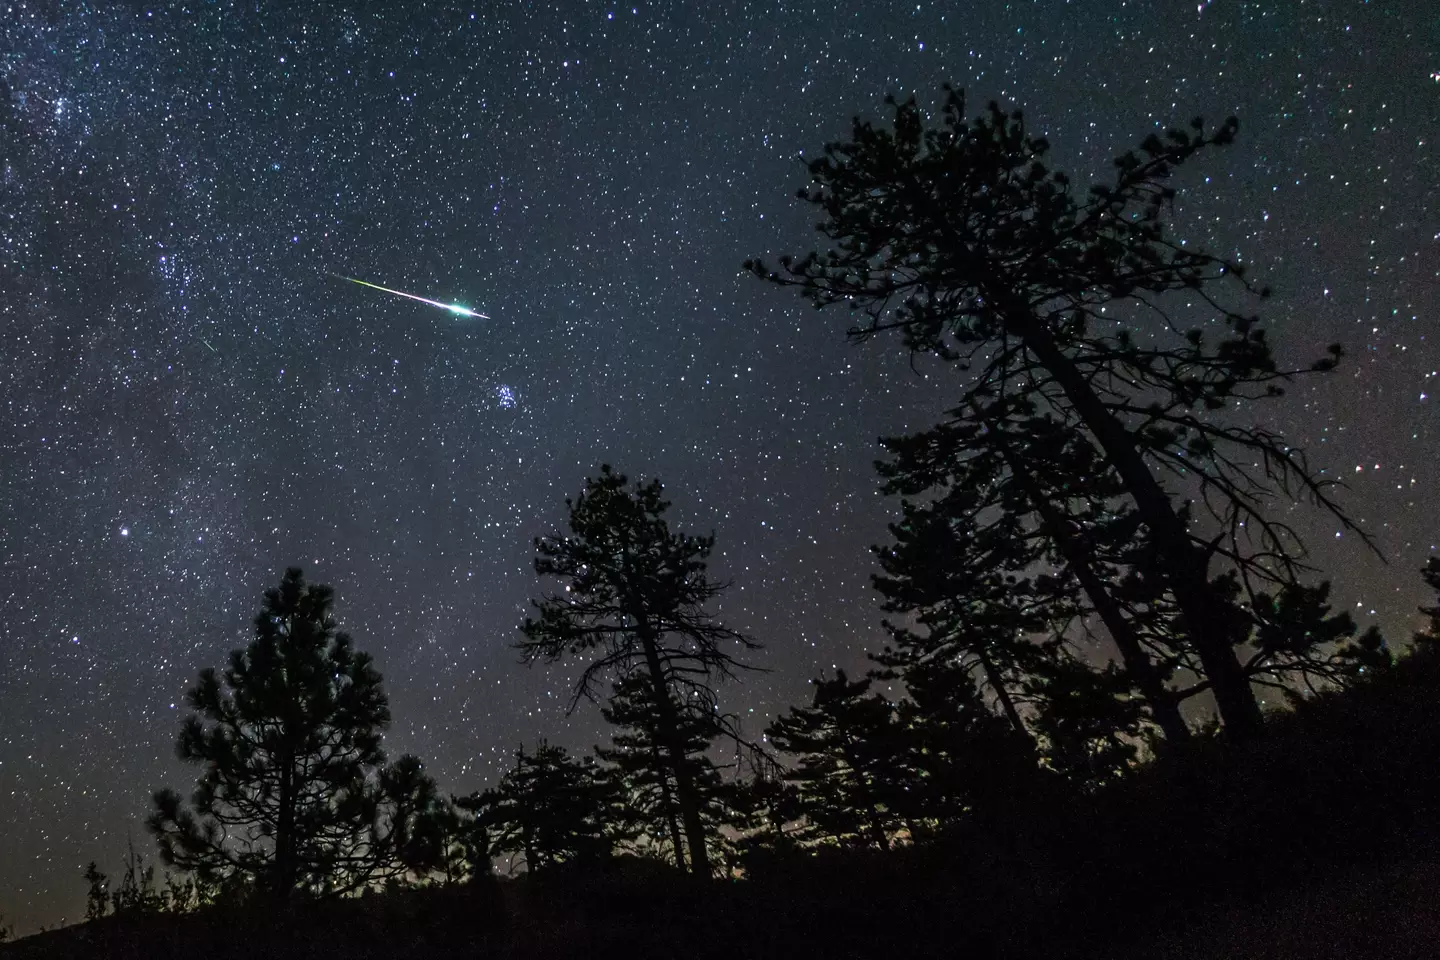 A Perseid meteor fireball.